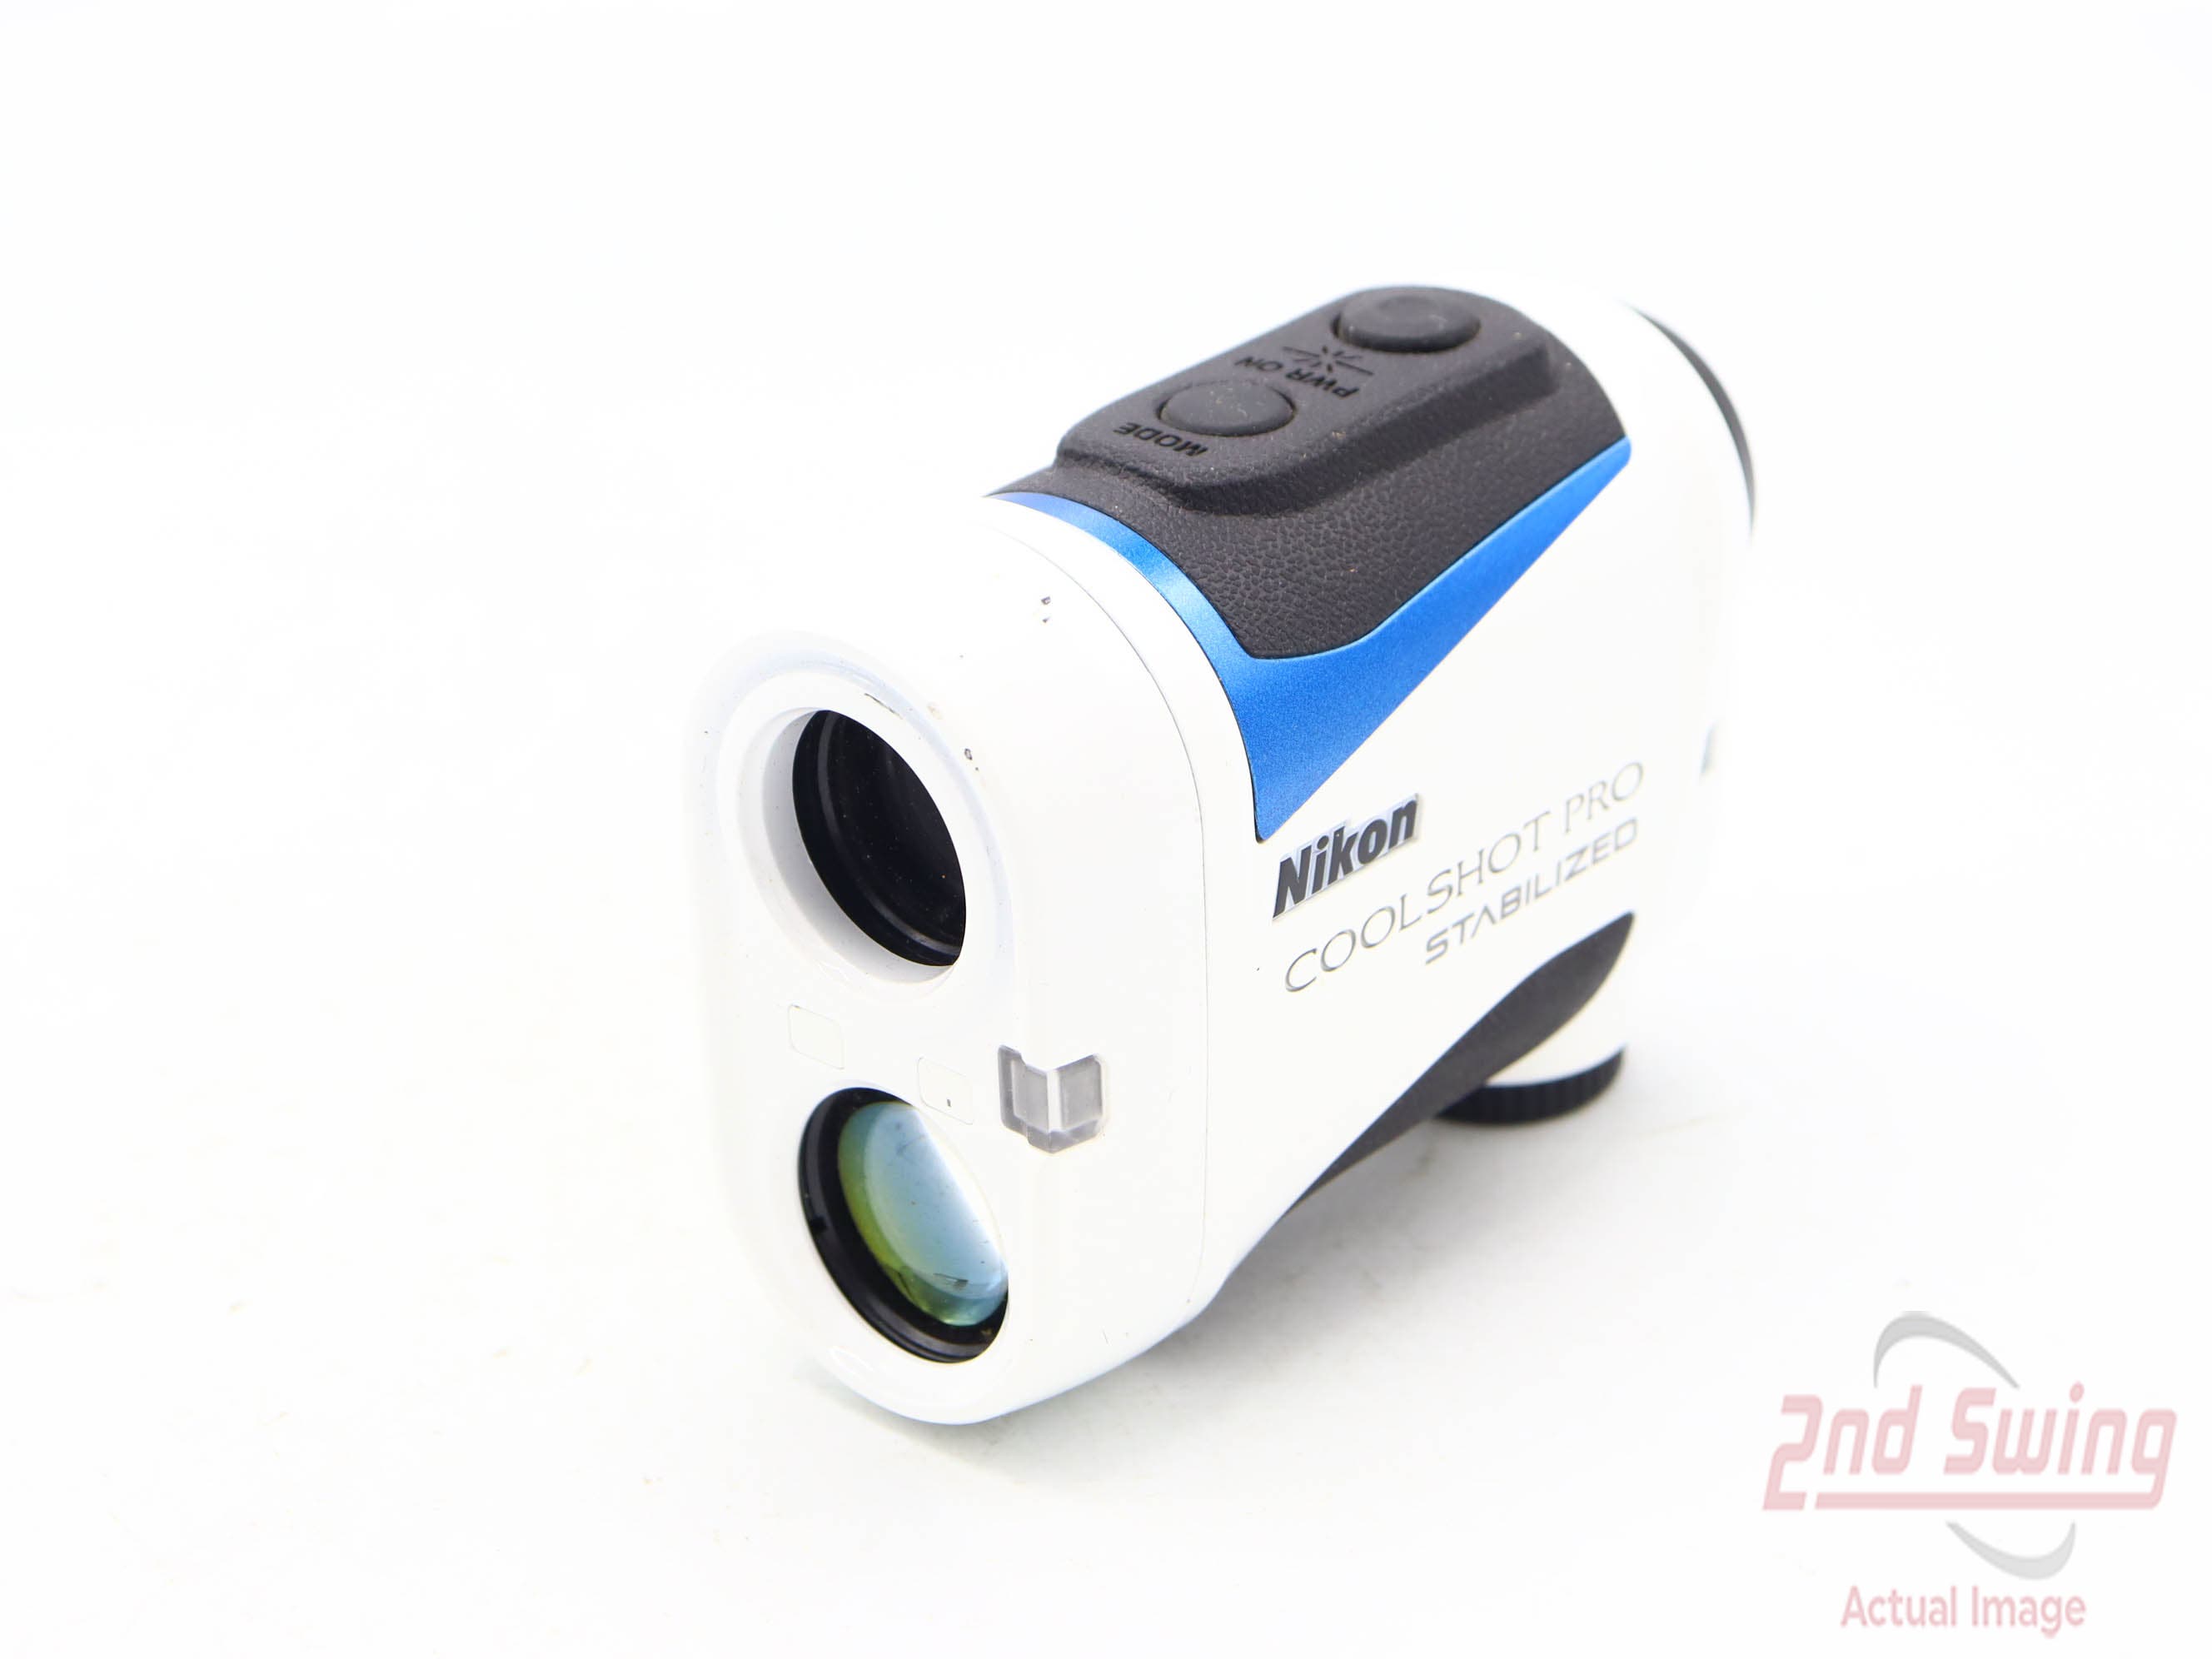 Nikon Coolshot Pro Stabilized Golf GPS & Rangefinders (D